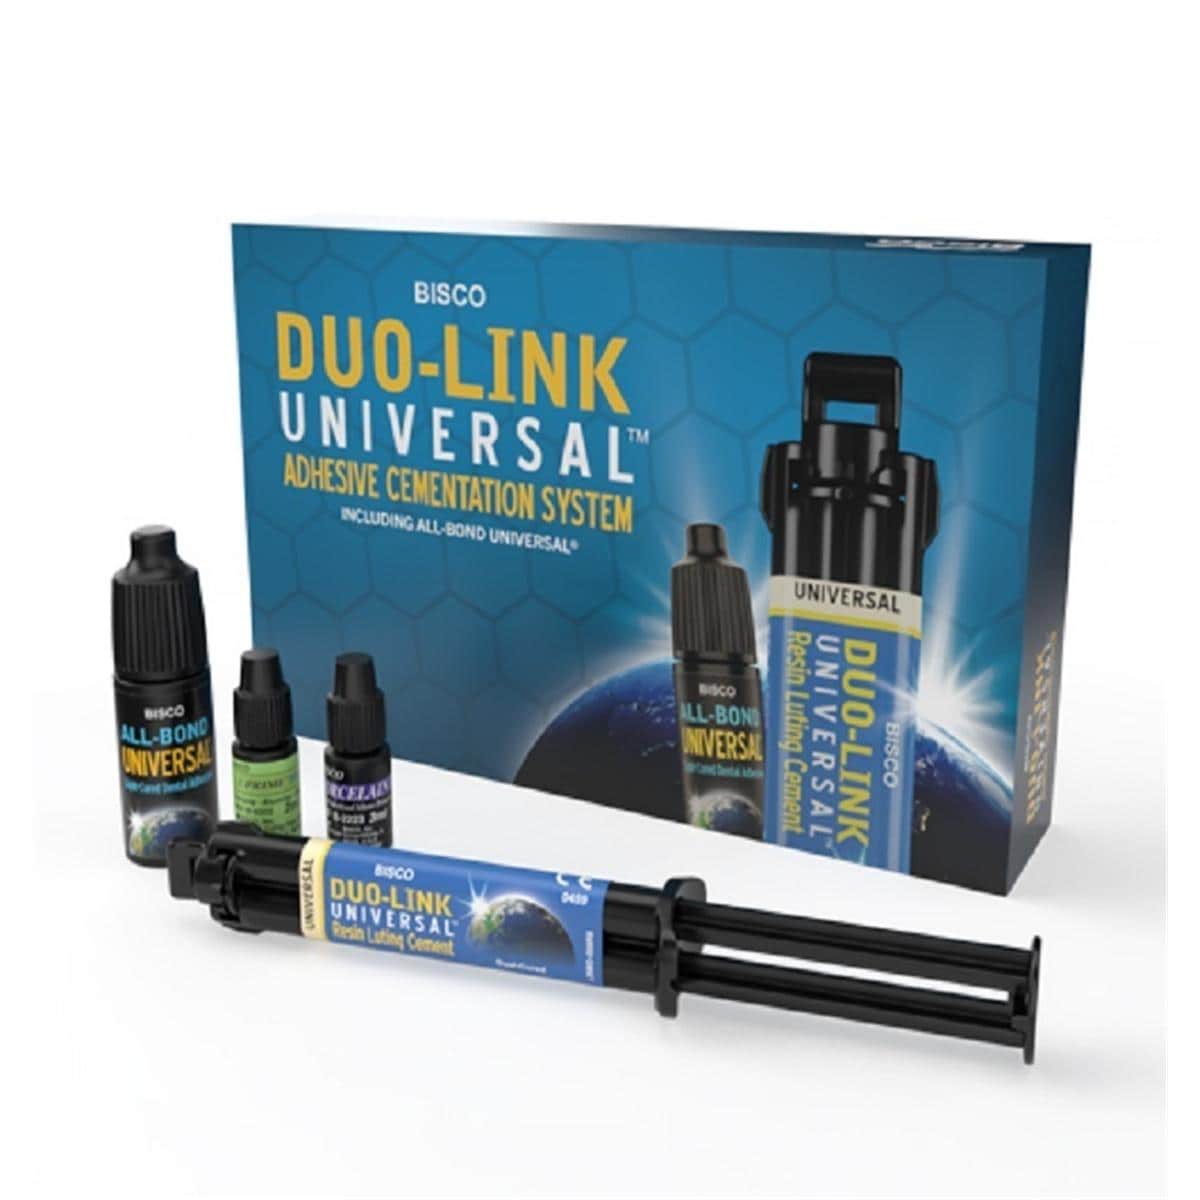 Duo-Link Universal - system kit - Per stuk